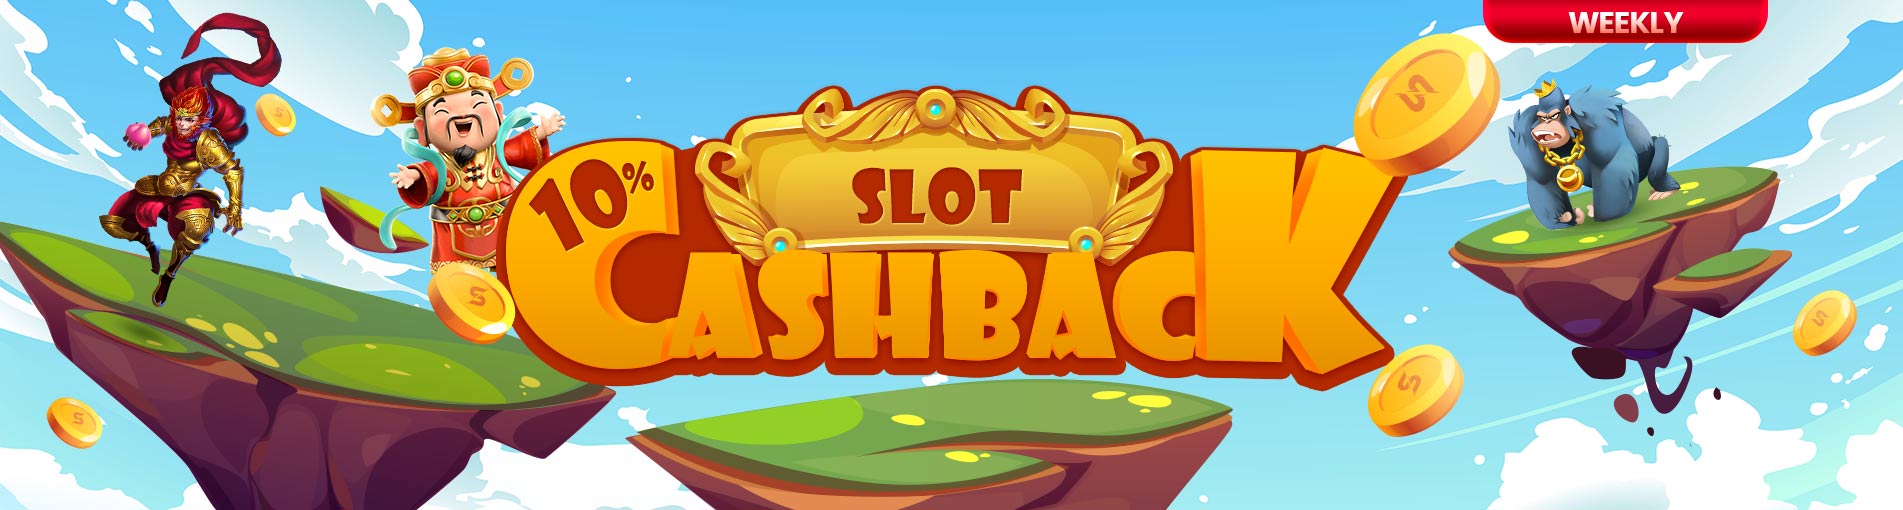 Slot Cashback 10%